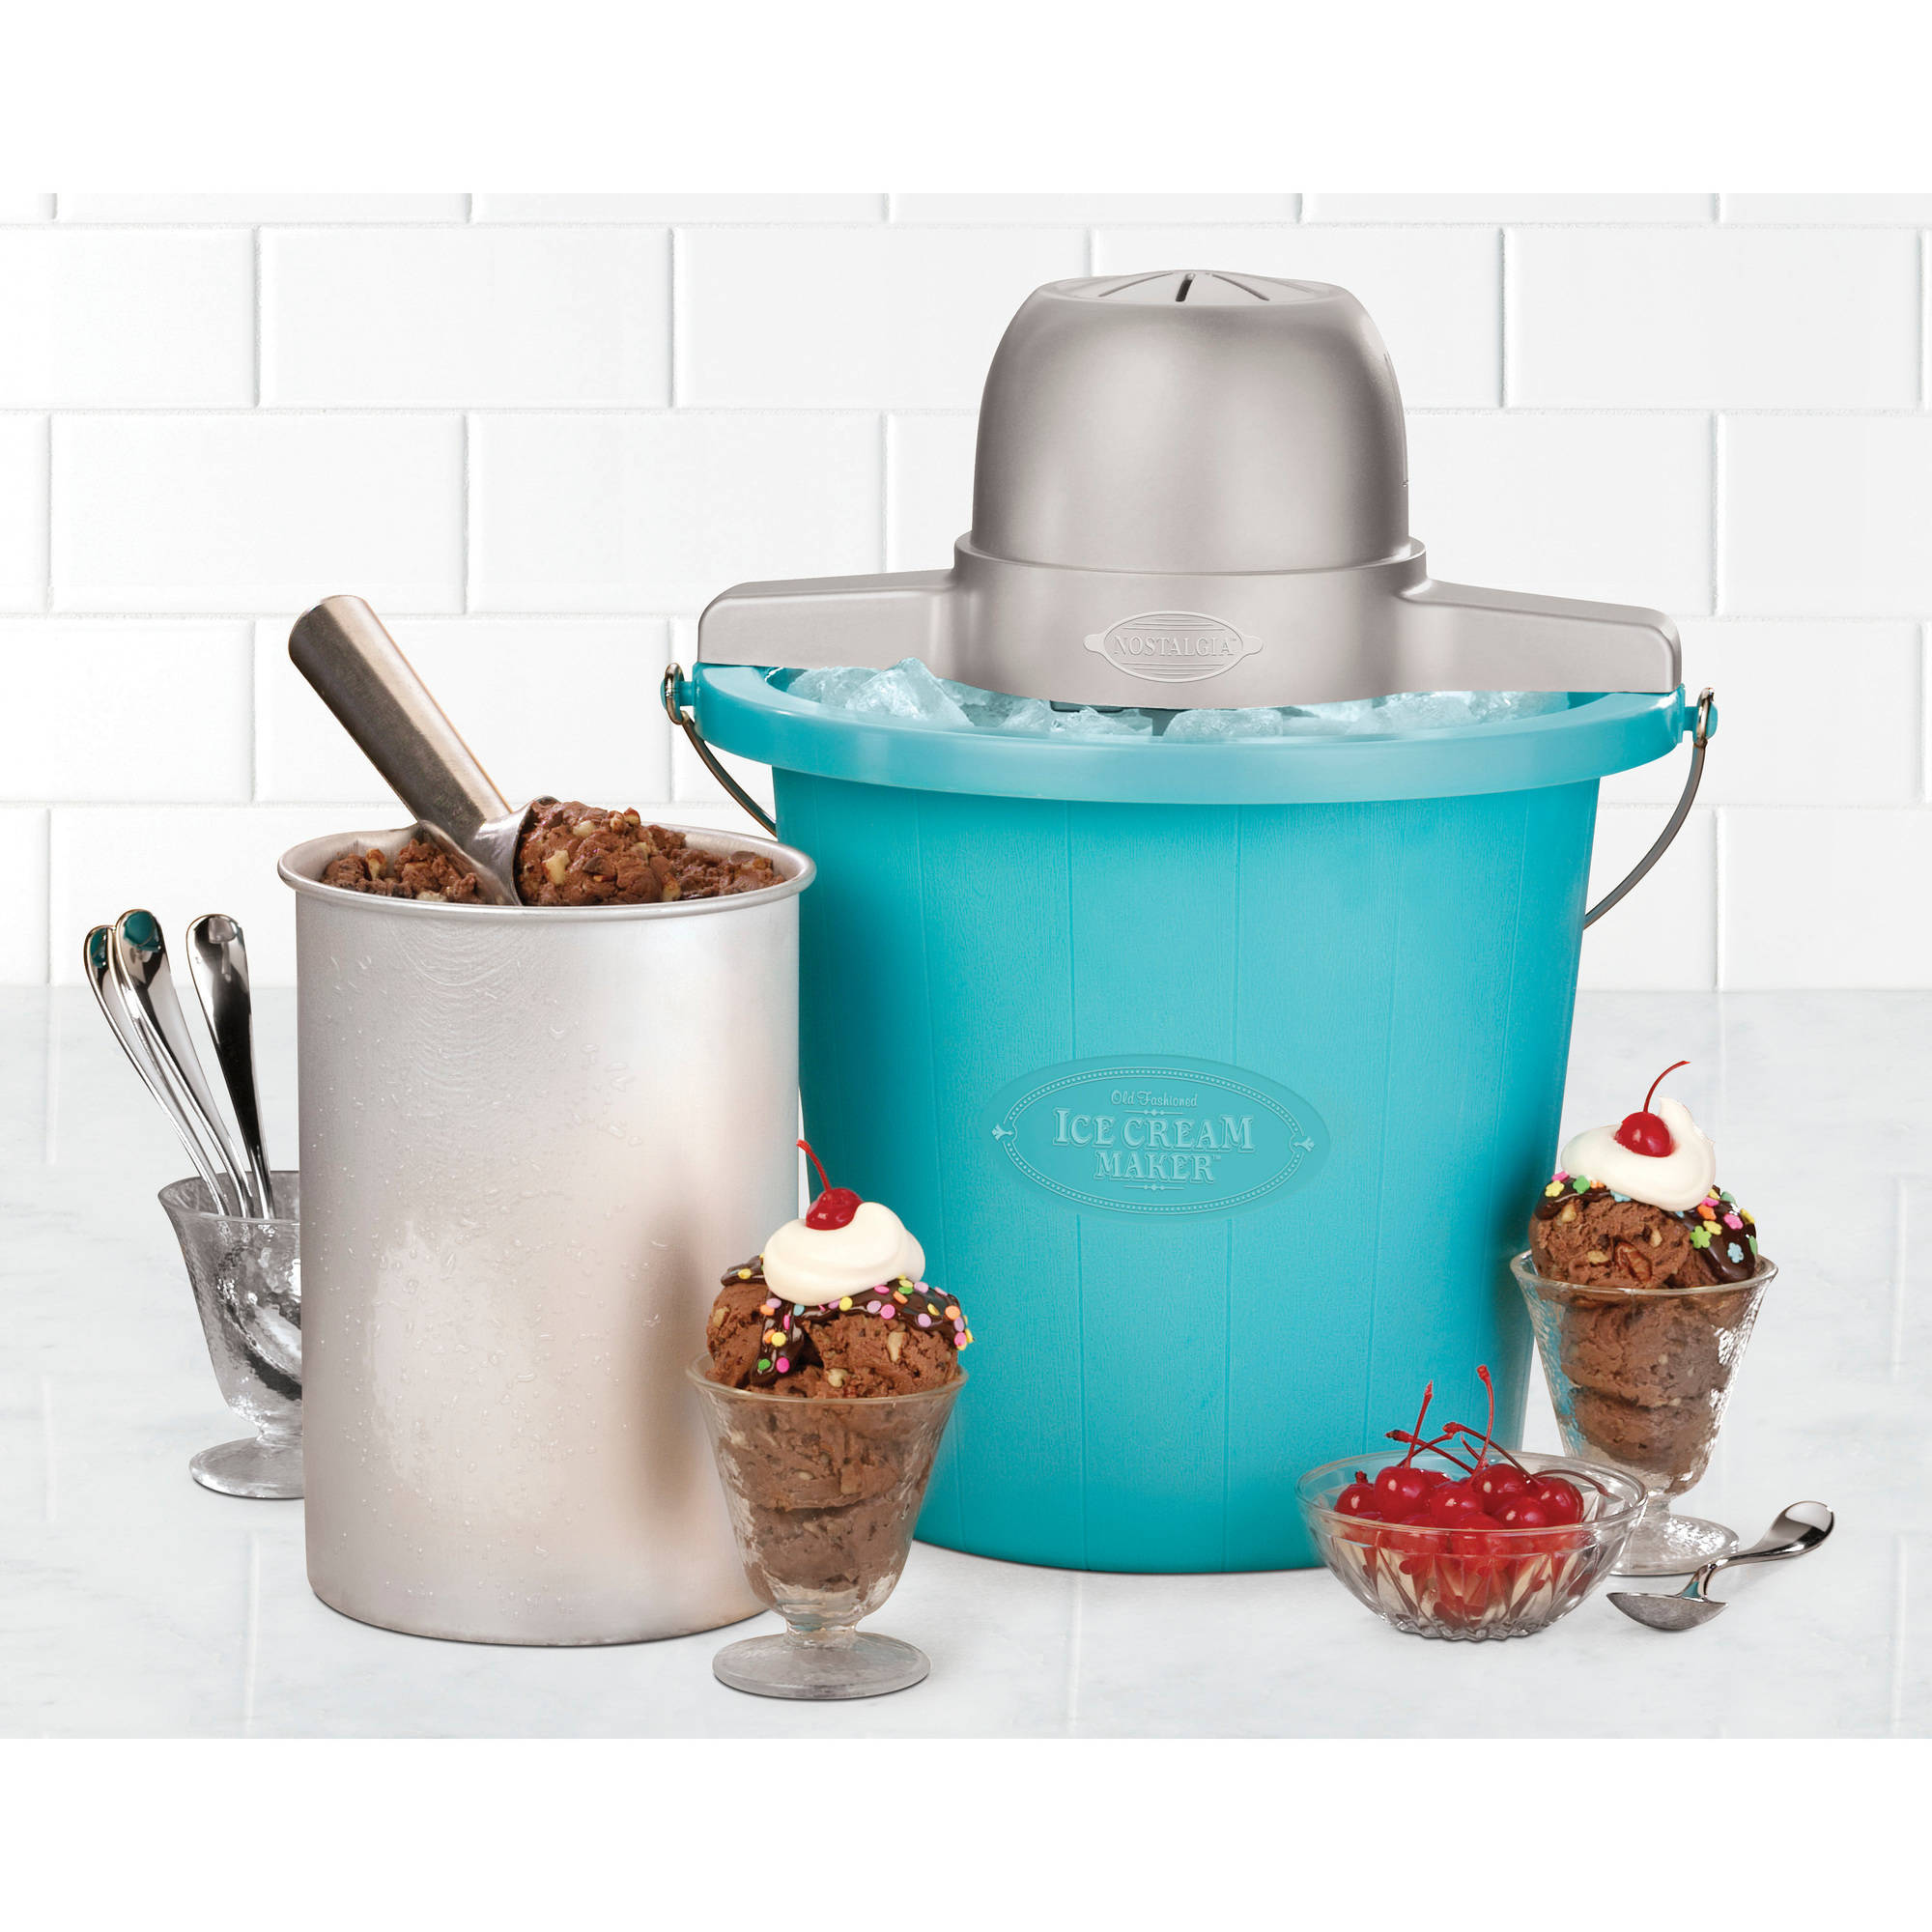 Nostalgia 4-Quart Bucket Electric Ice Cream Maker, Blue - image 3 of 4